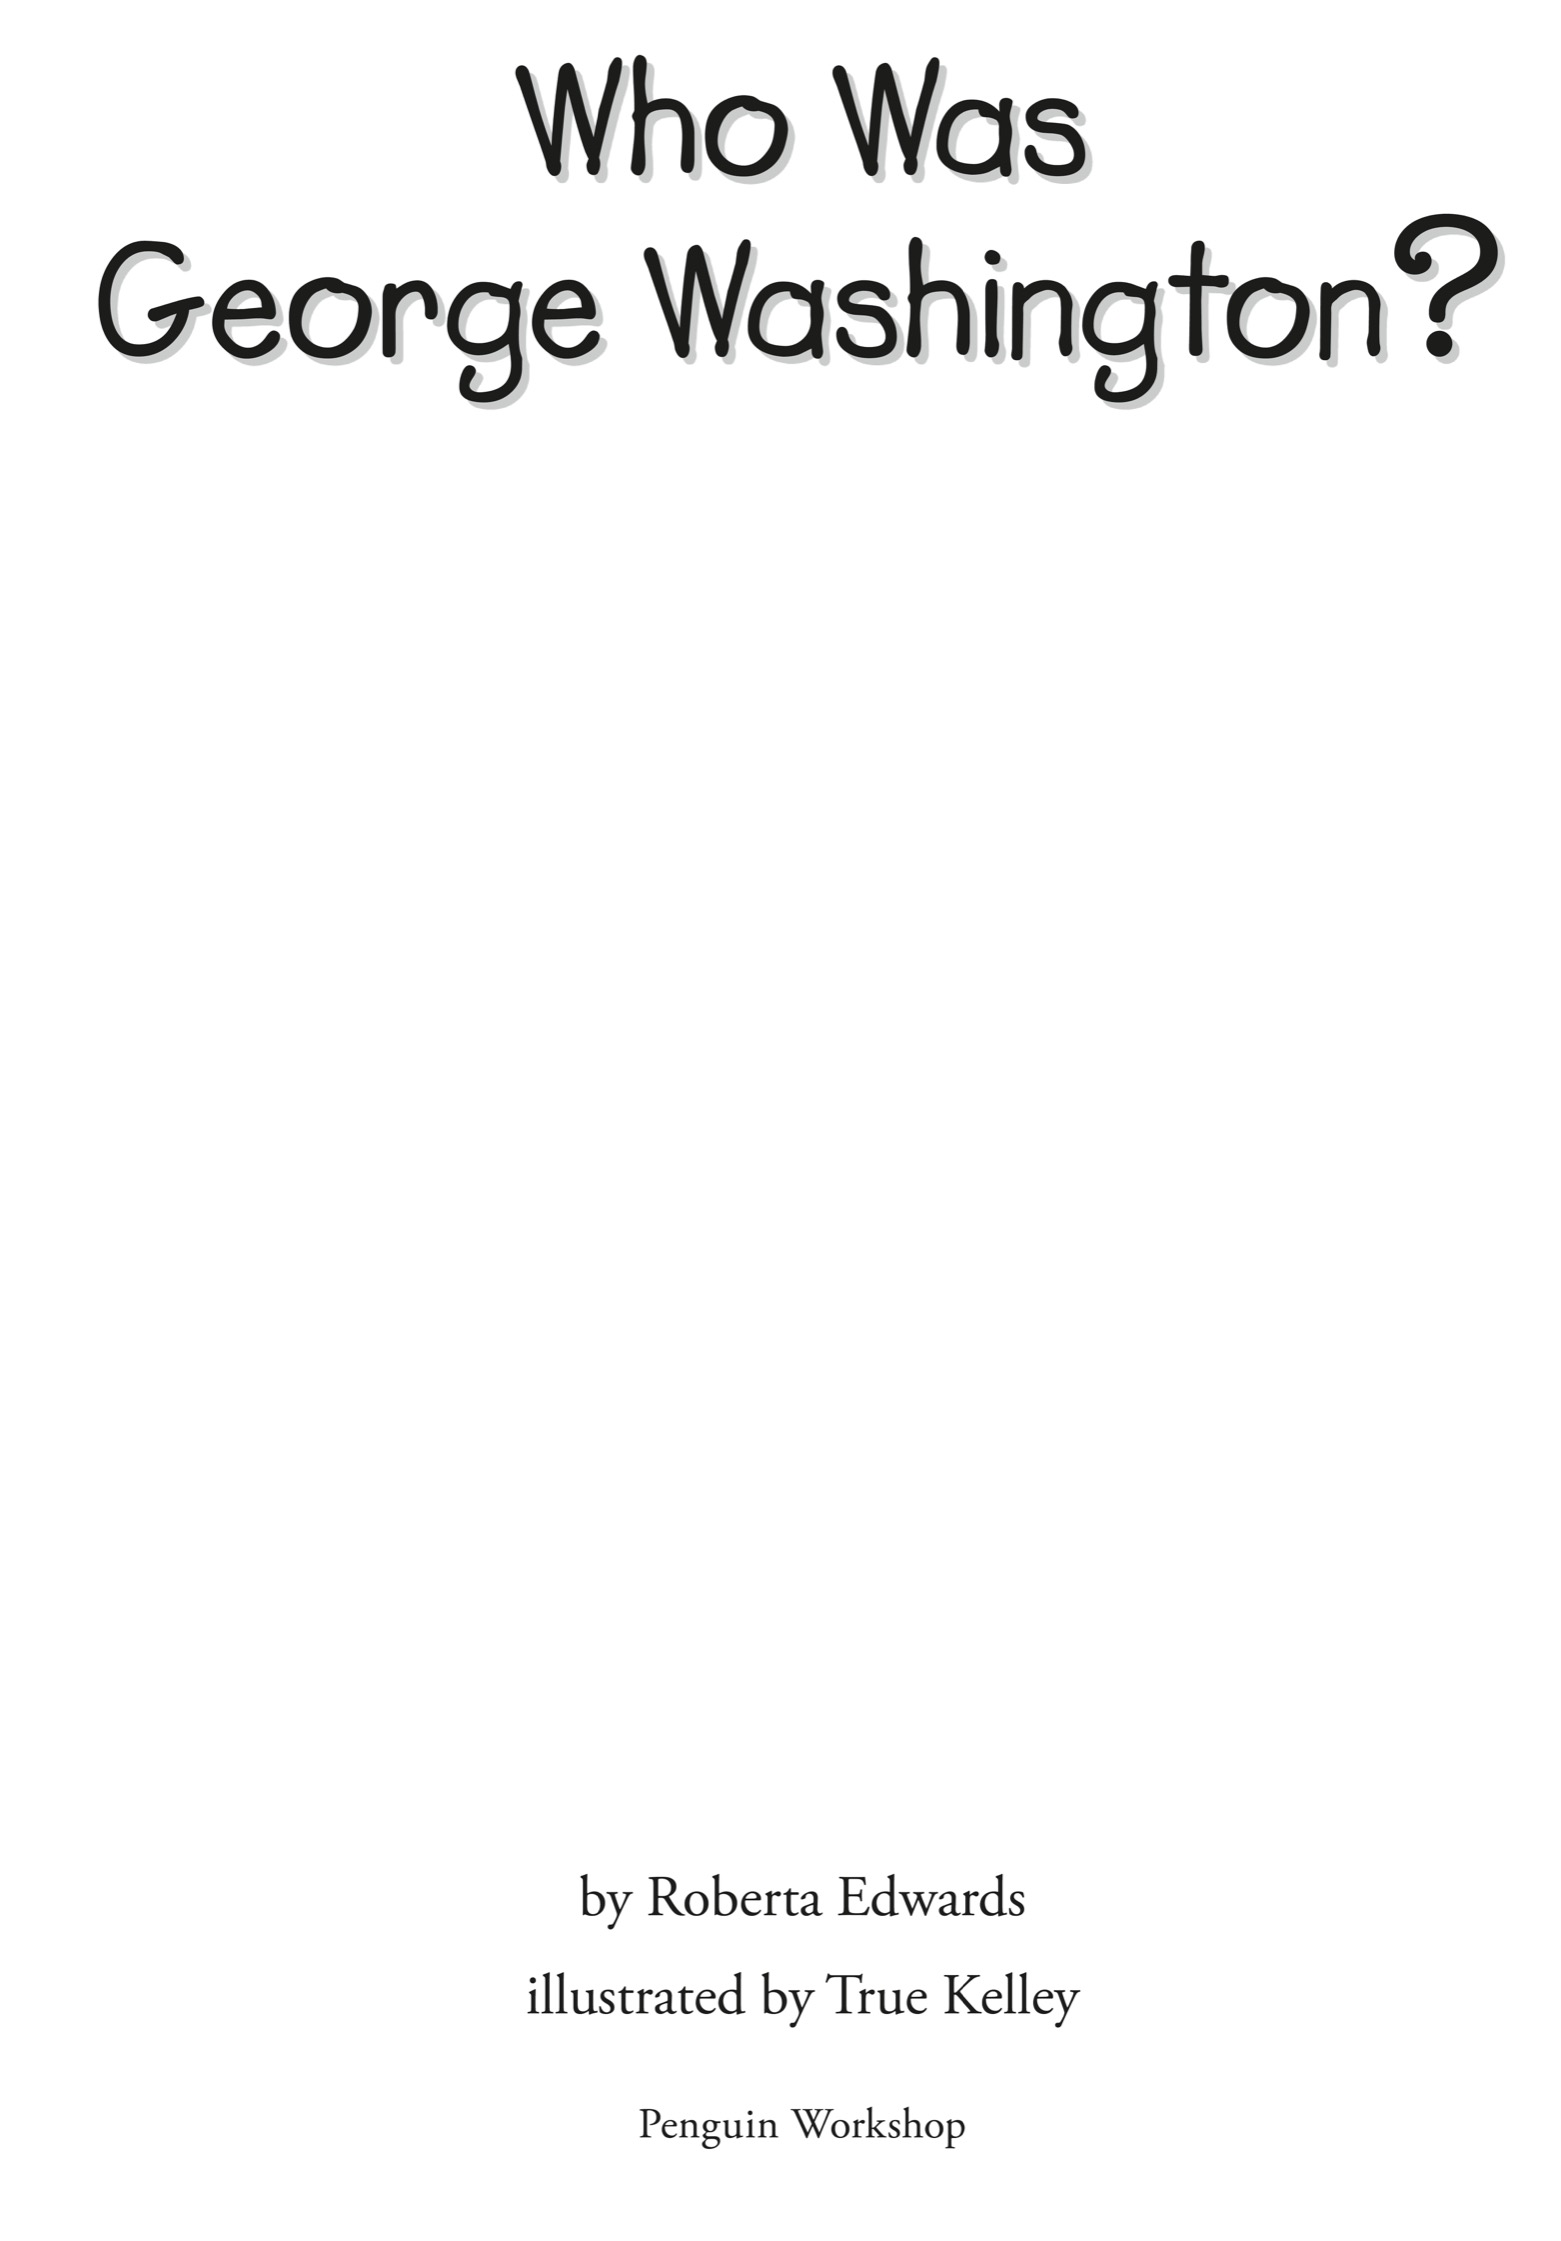 Book title, Who Was George Washington?, author, Roberta Edwards, imprint, Penguin Workshop